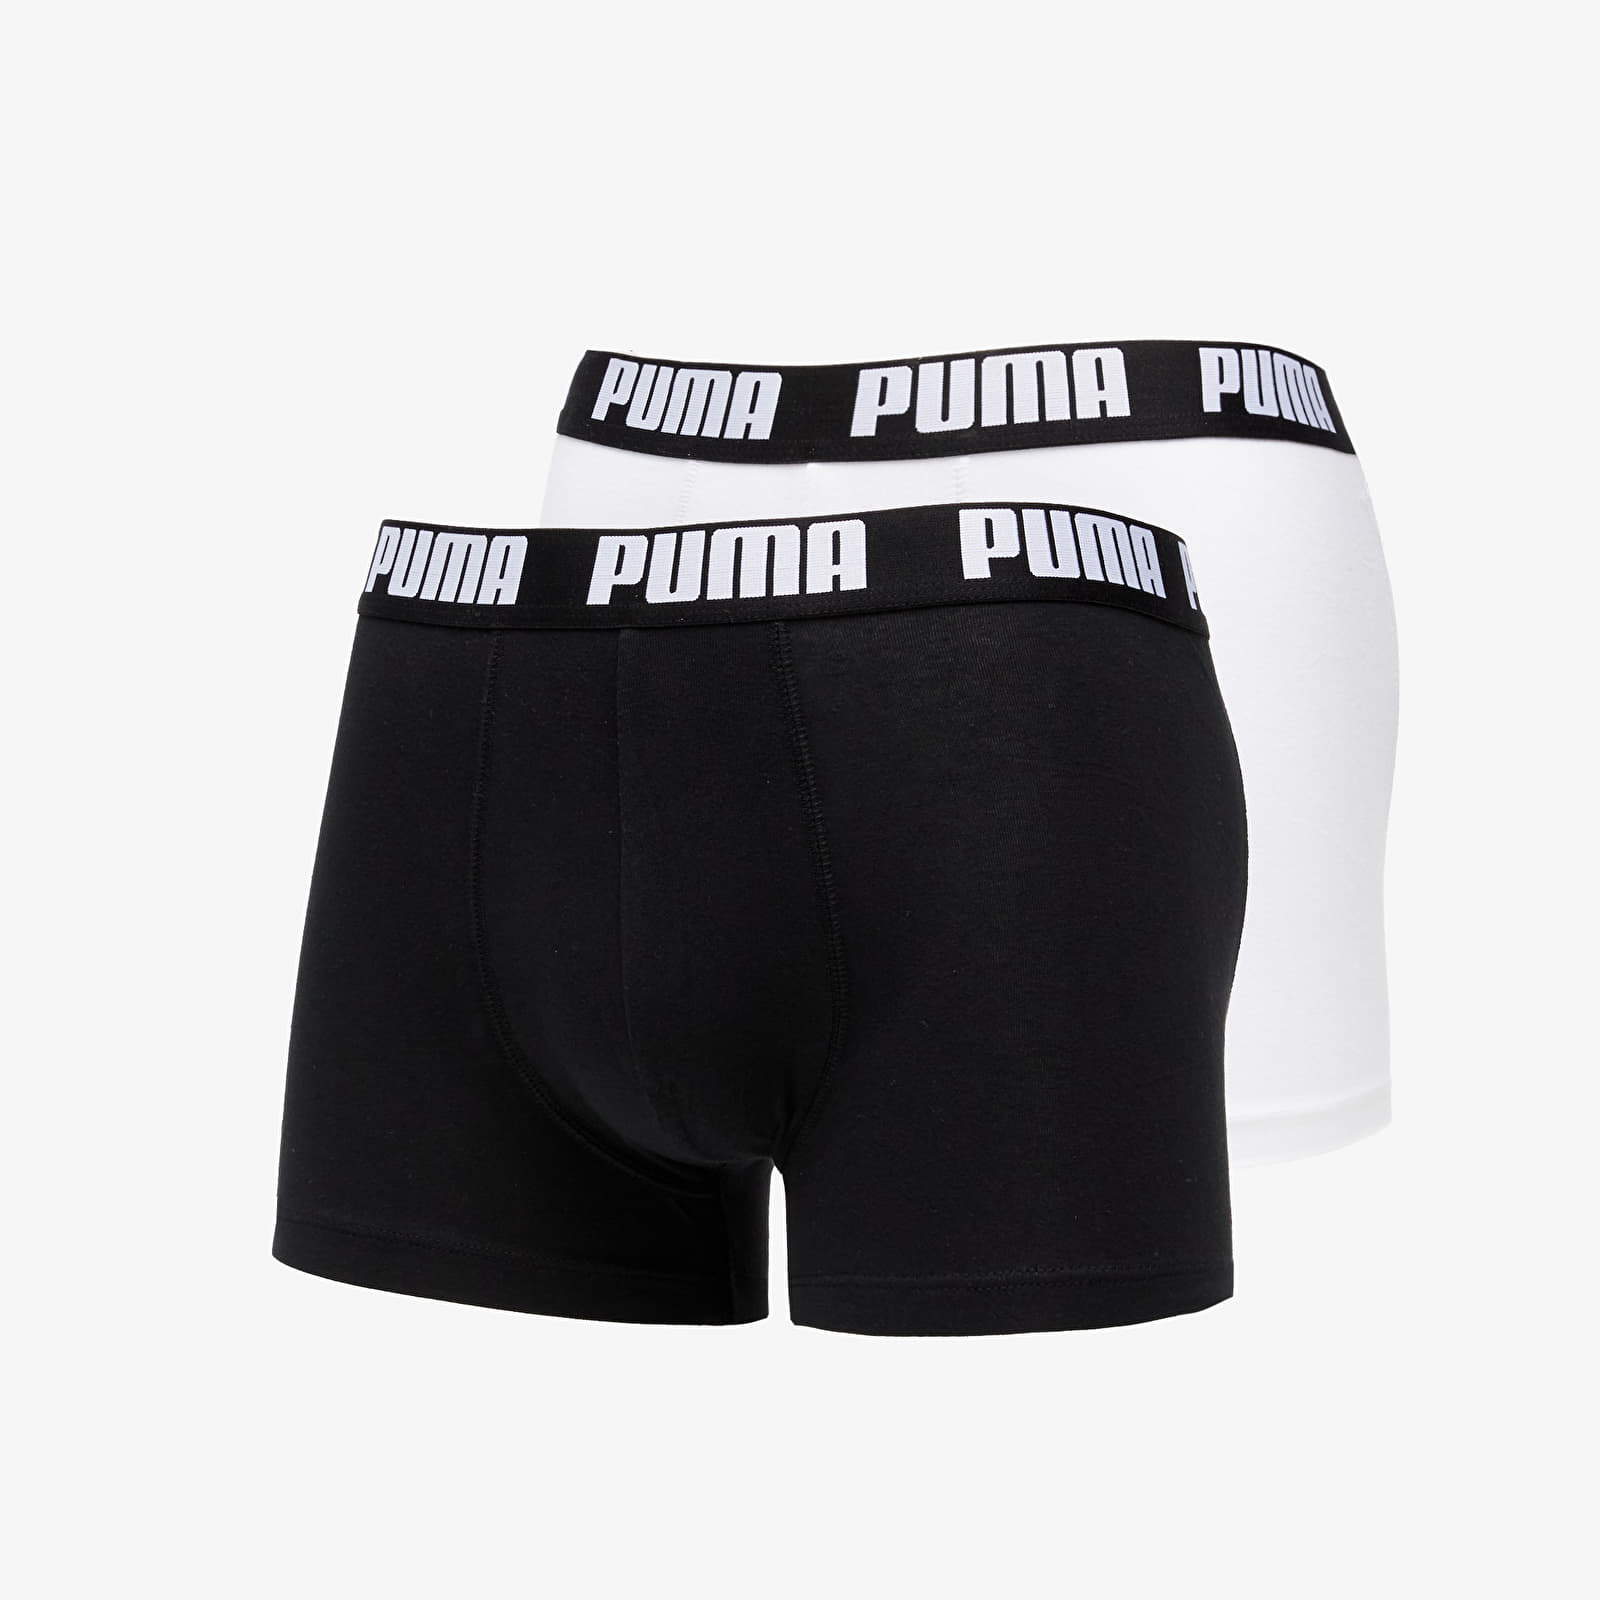 Boxer shorts Puma 2 Pack Basic Boxers White/ Black